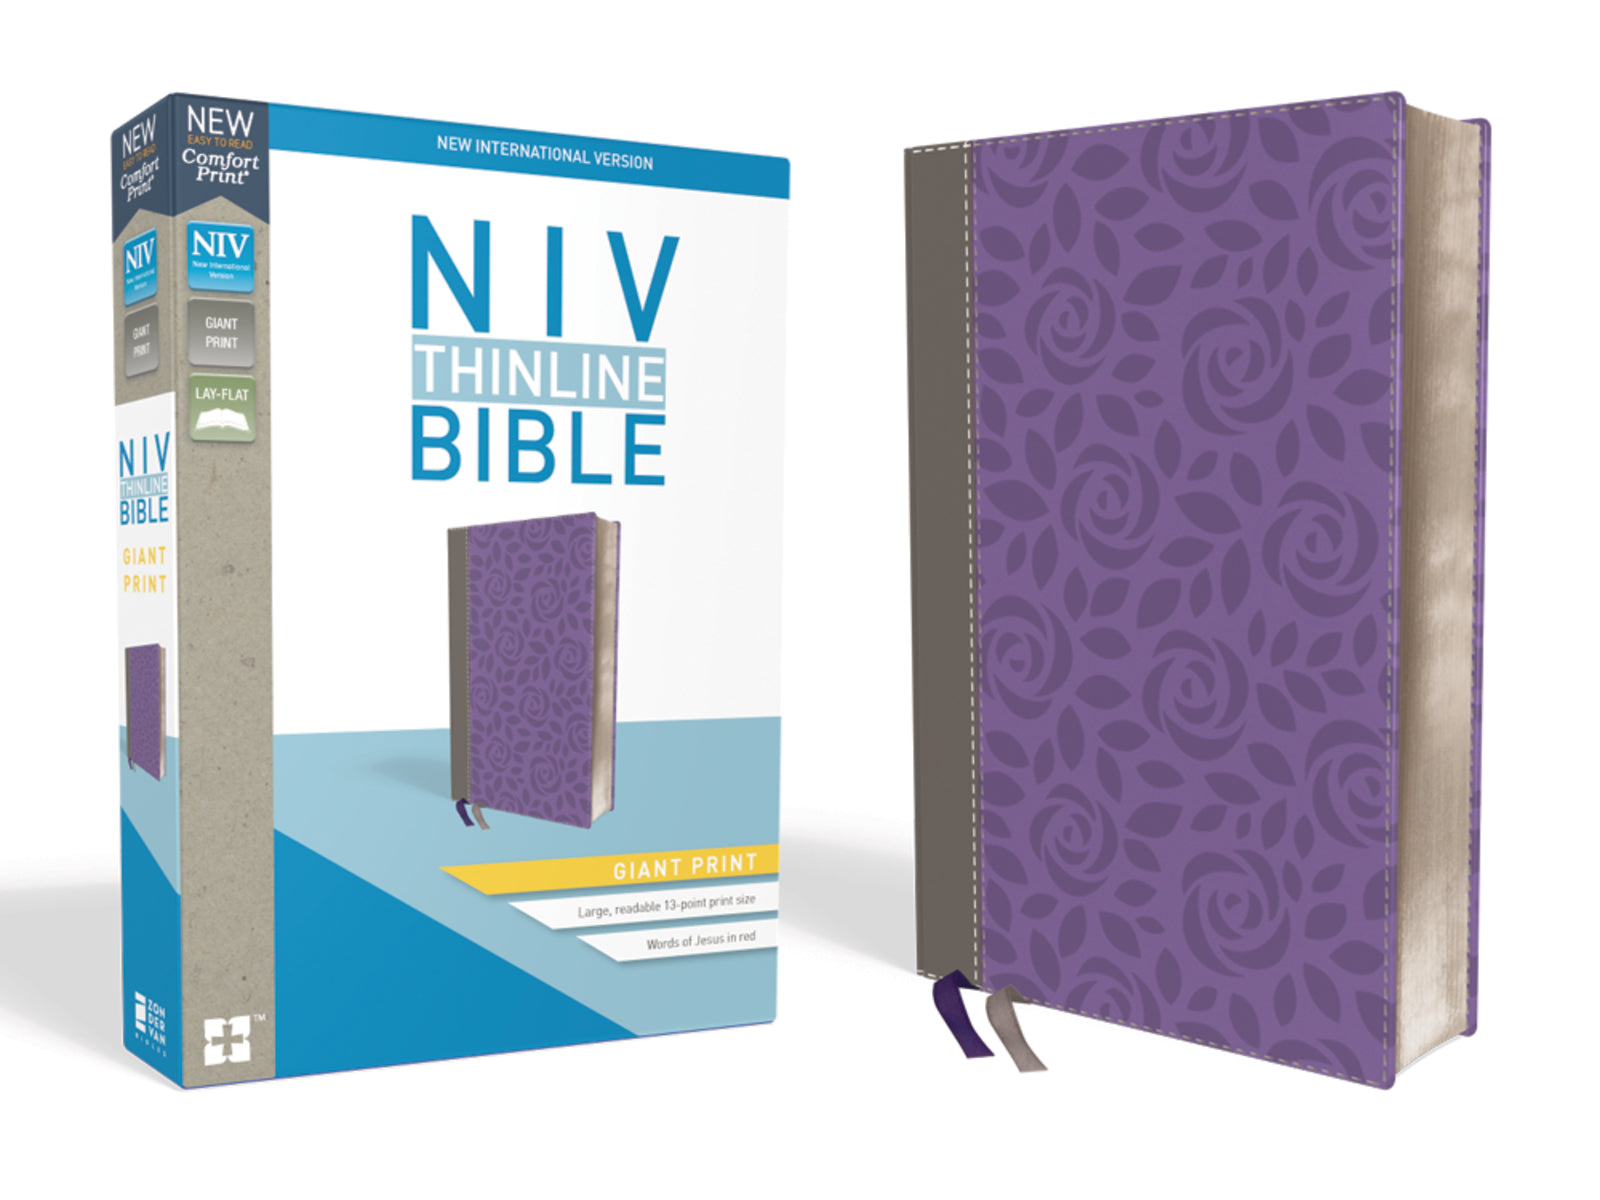 NIV Thinline Bible Giant Print Comfort-Purple/ Gray